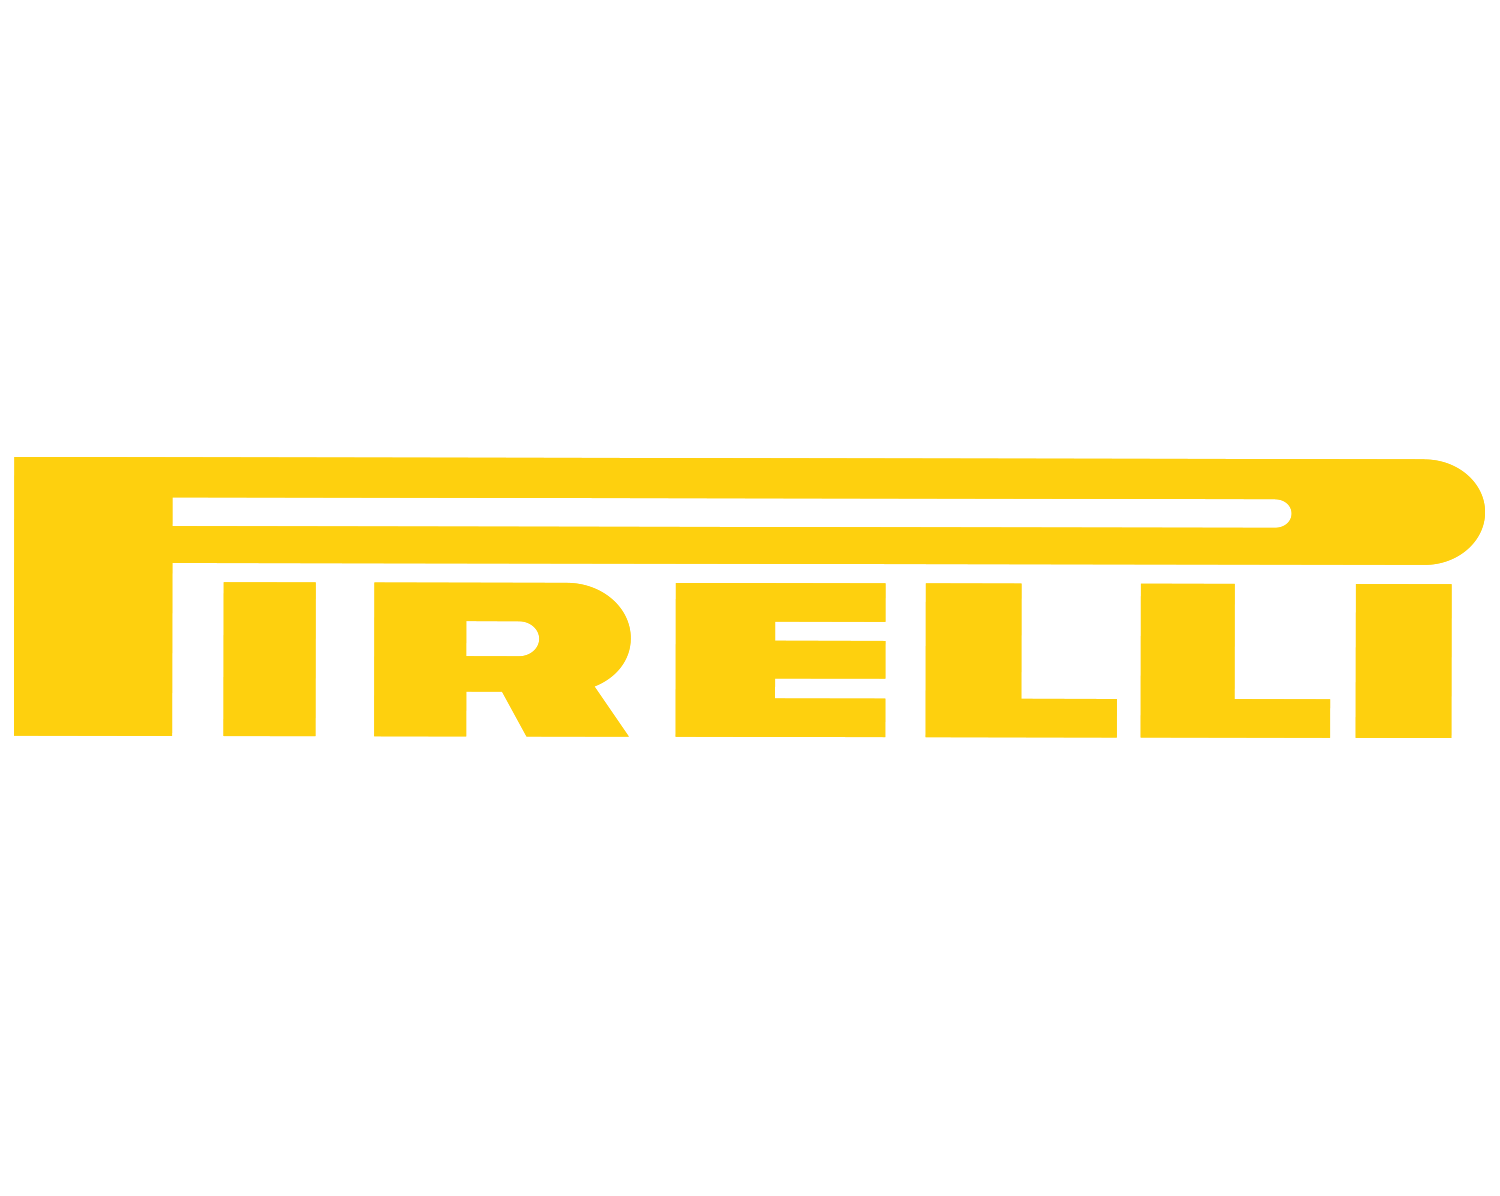 Download Hd Pirelli Logo Png 